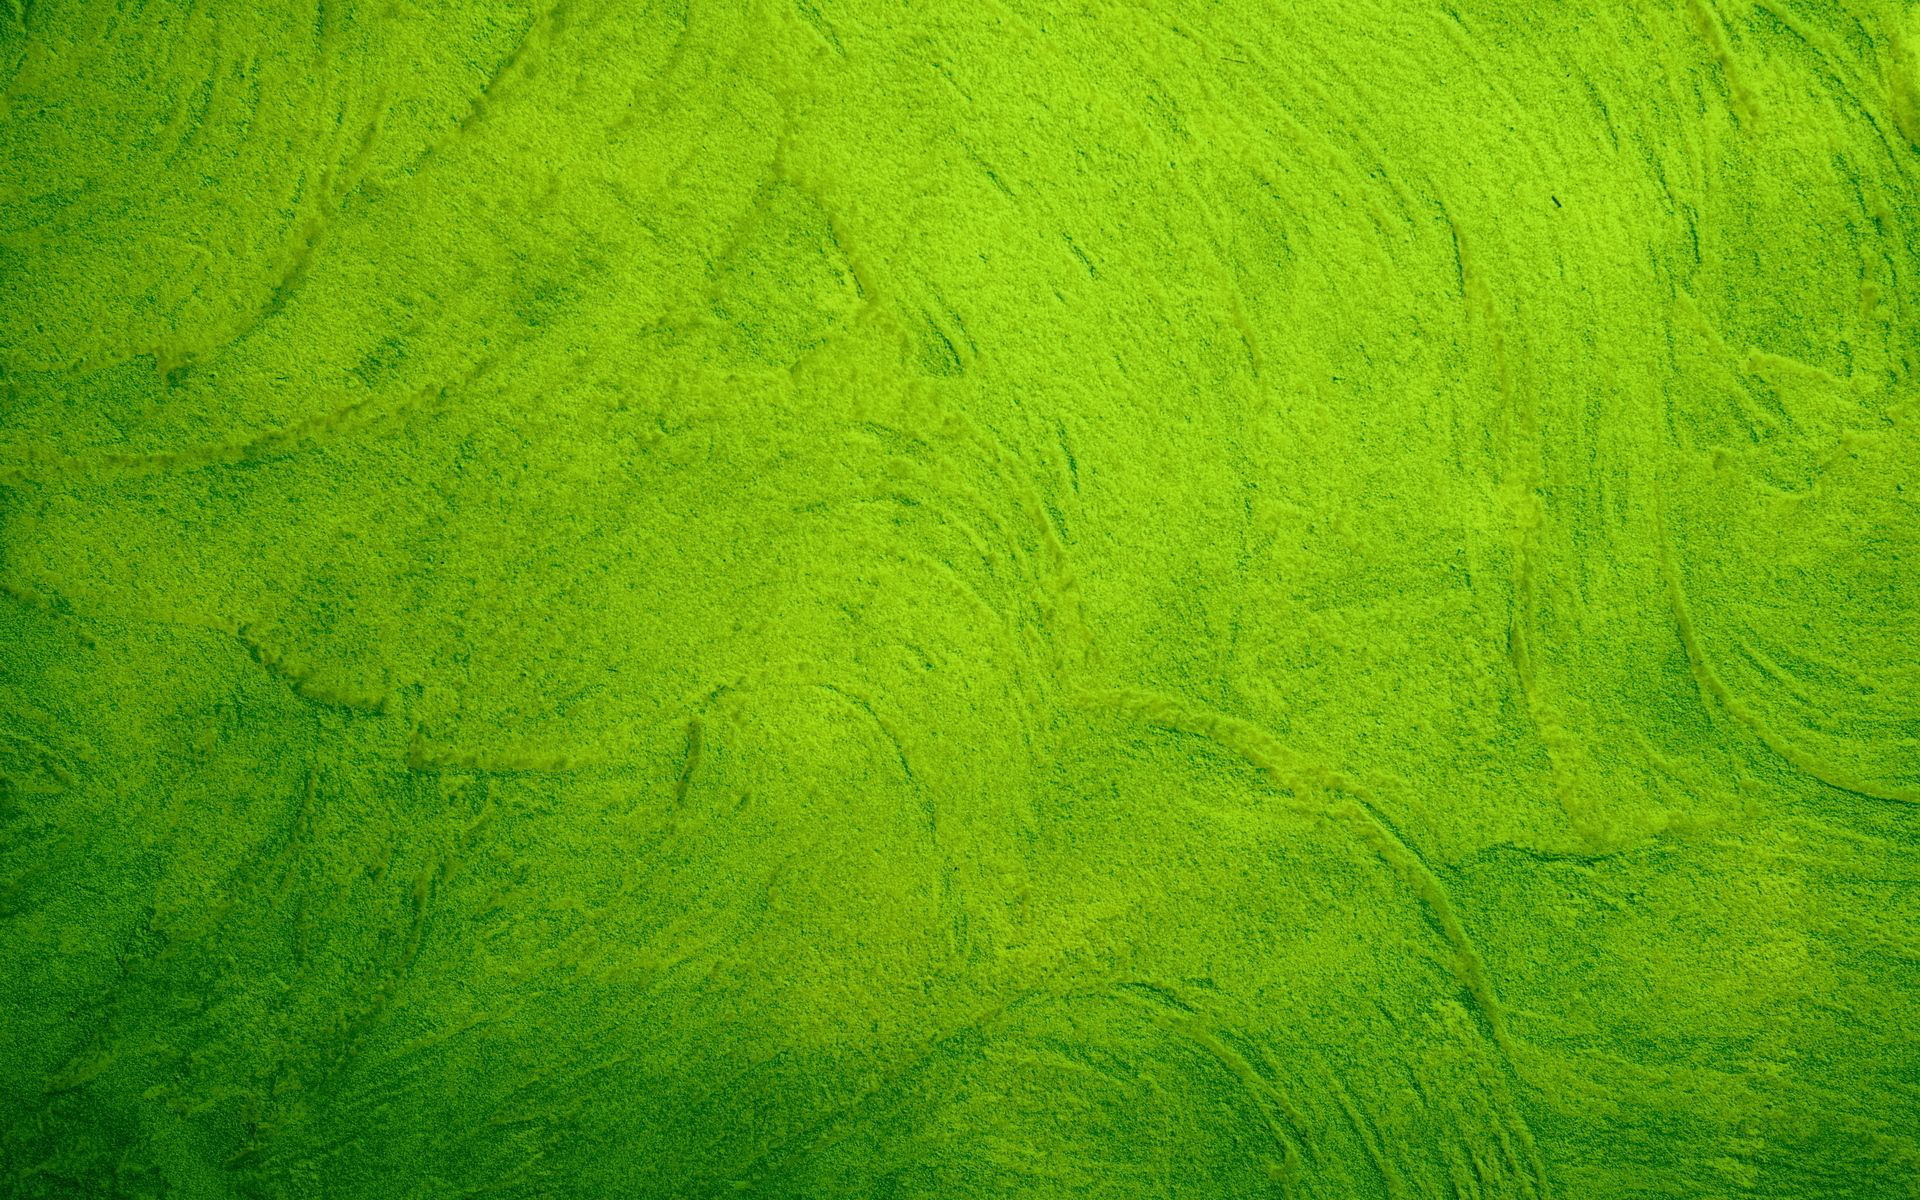 green paint, texture paints, background, download photo, green paint texture background. Green texture background, Texture background hd, Textured background